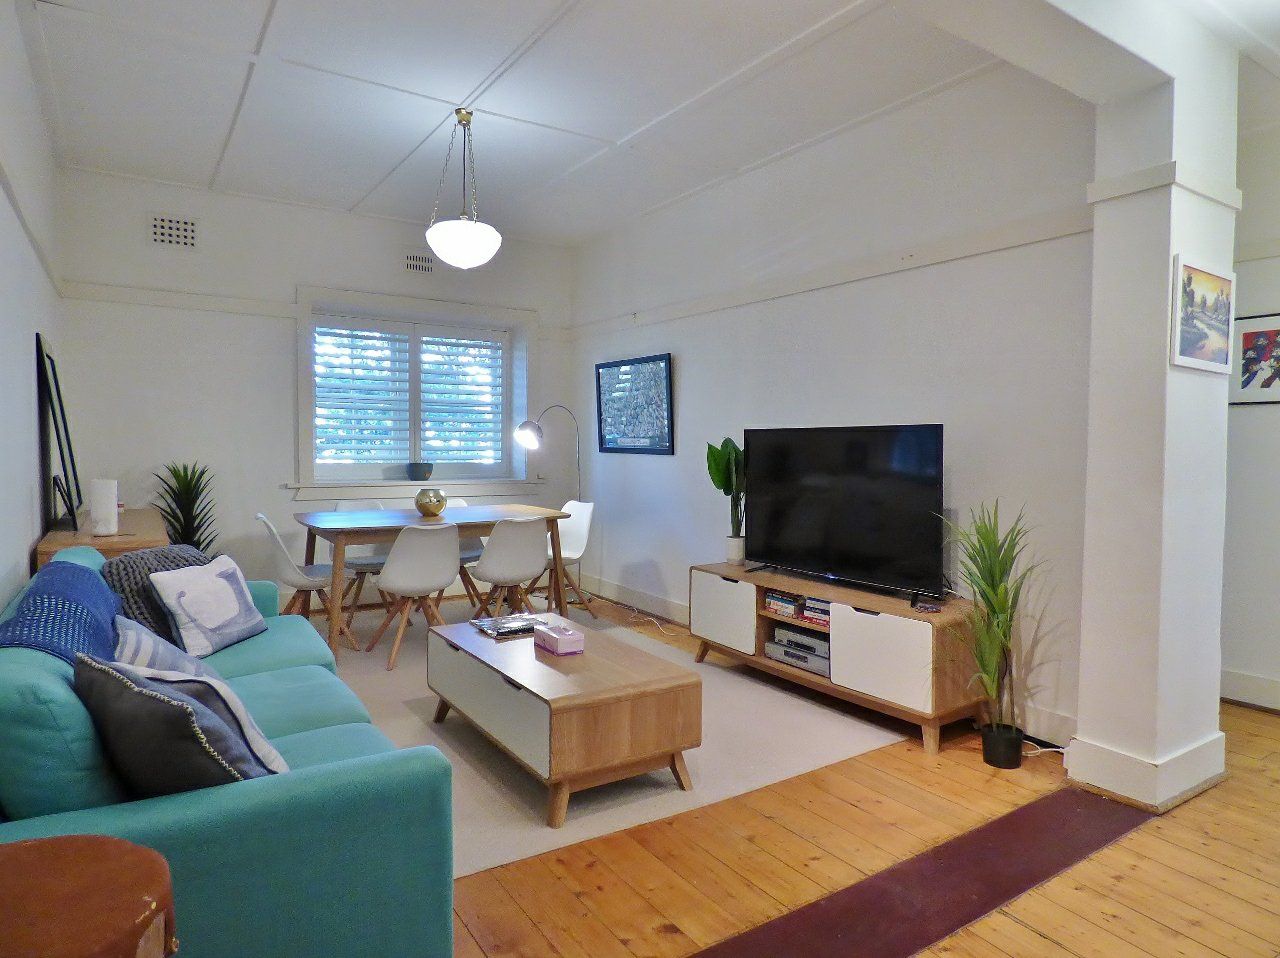 2 bedrooms Apartment / Unit / Flat in 2/22 Furber Road CENTENNIAL PARK NSW, 2021